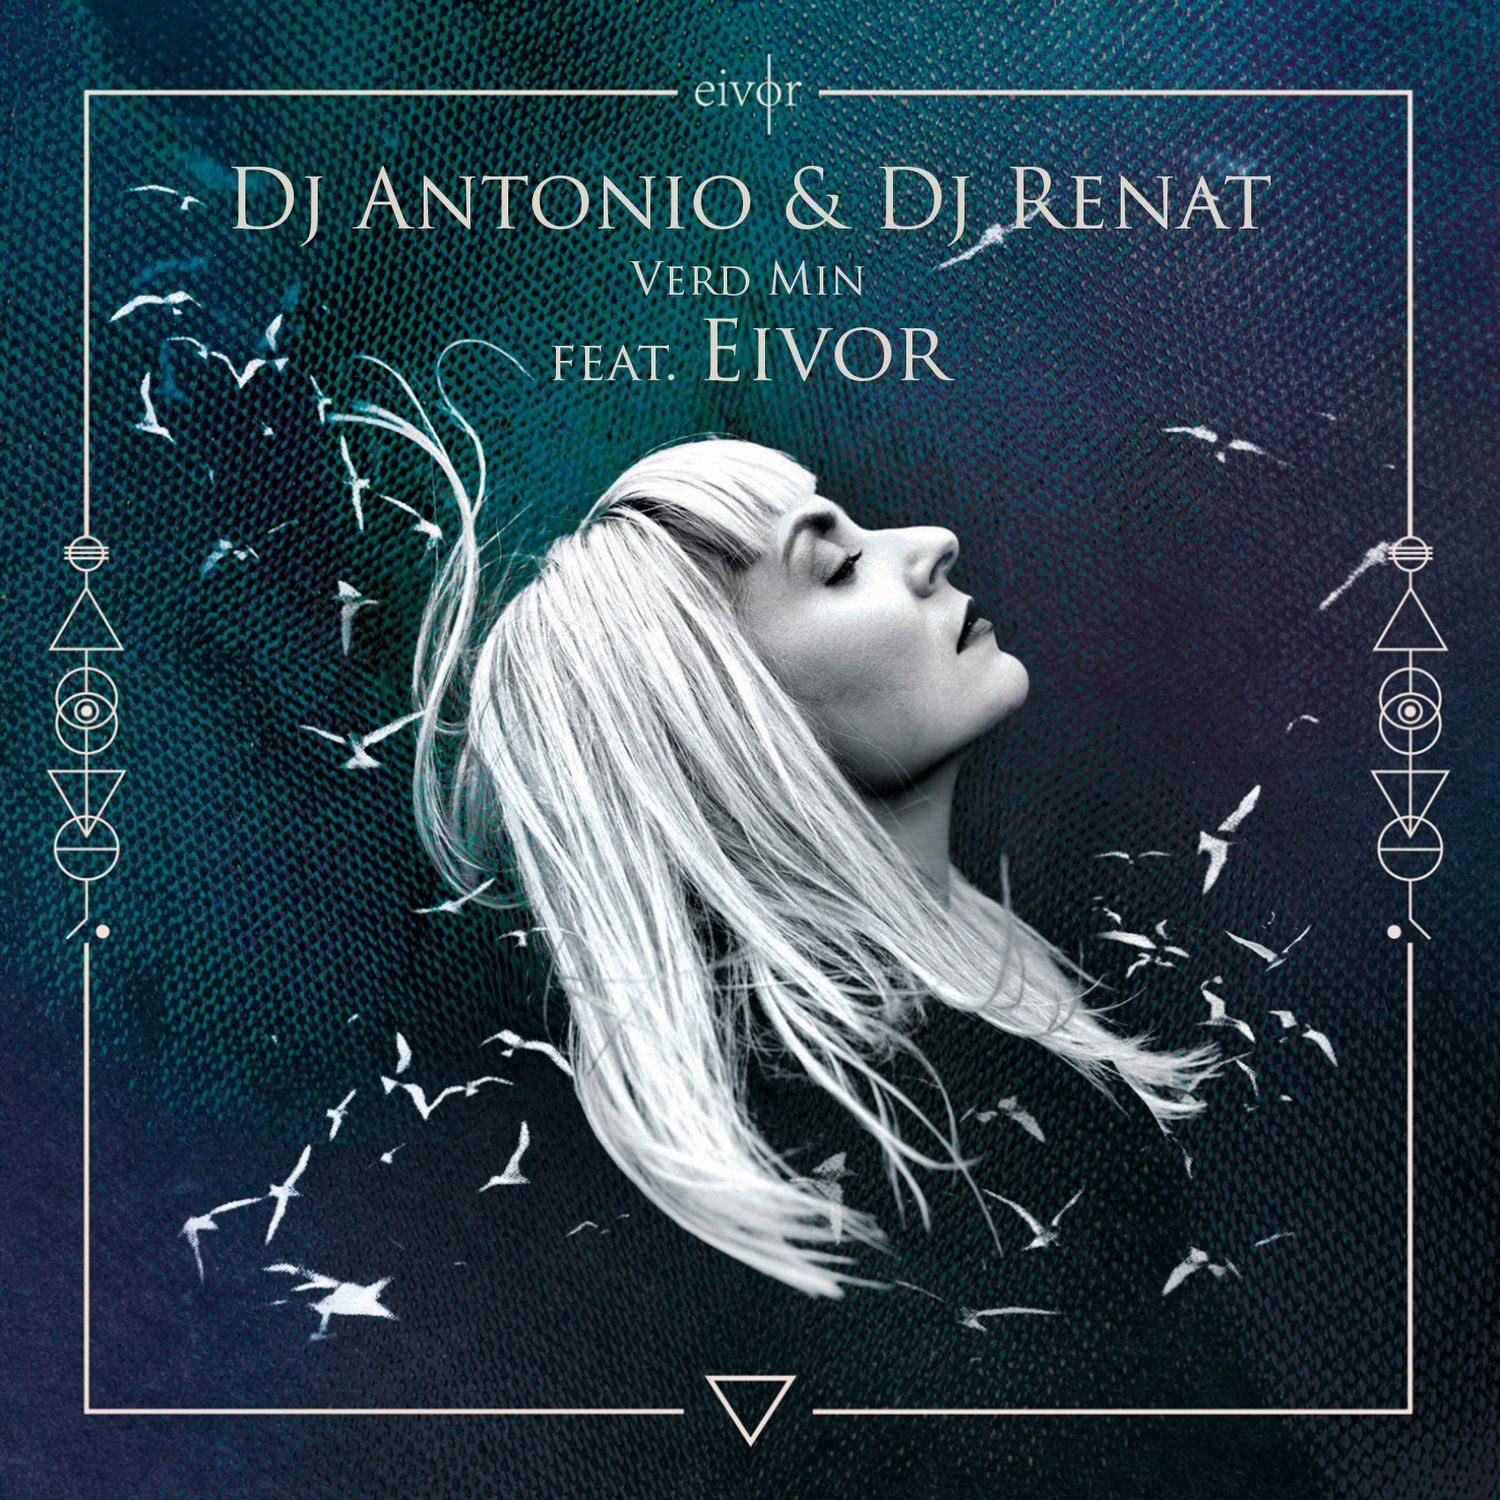 Sii mai Dj Antonio & Dj Renat - Verd Min (feat. Eivor) (Club Mix)